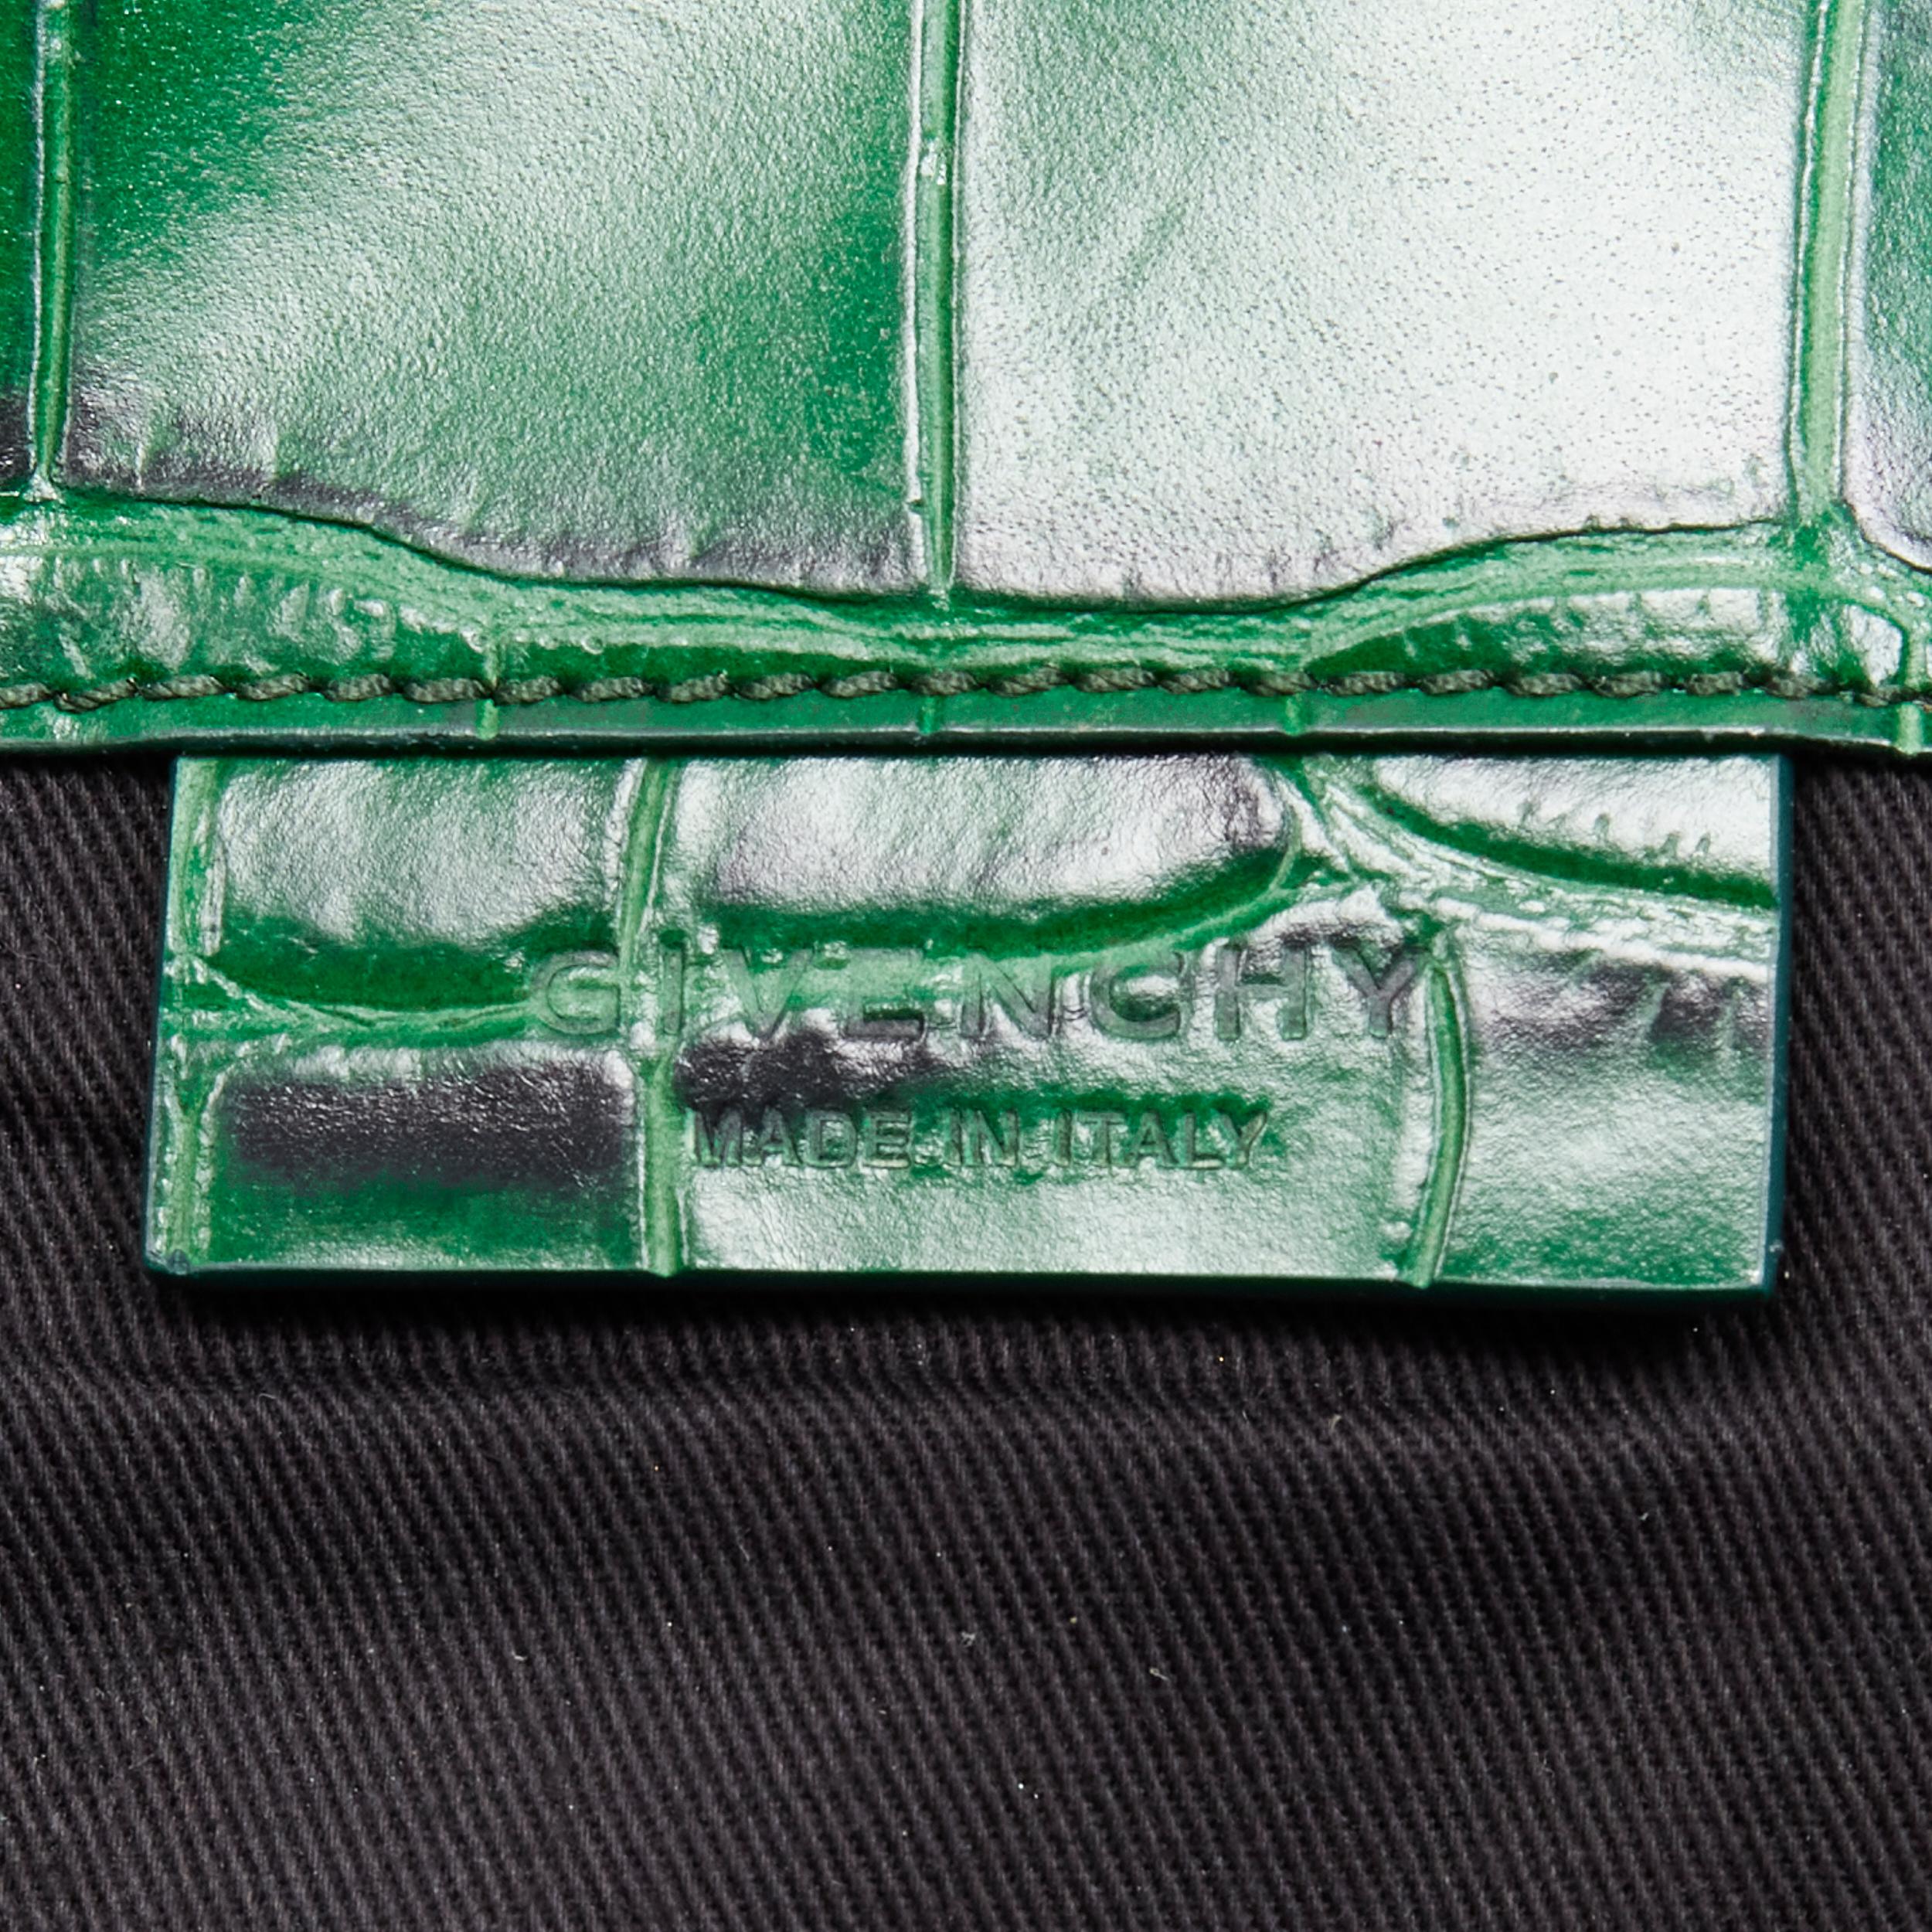 GIVENCHY Antigona green mock croc leather flap envelope clutch bag 2